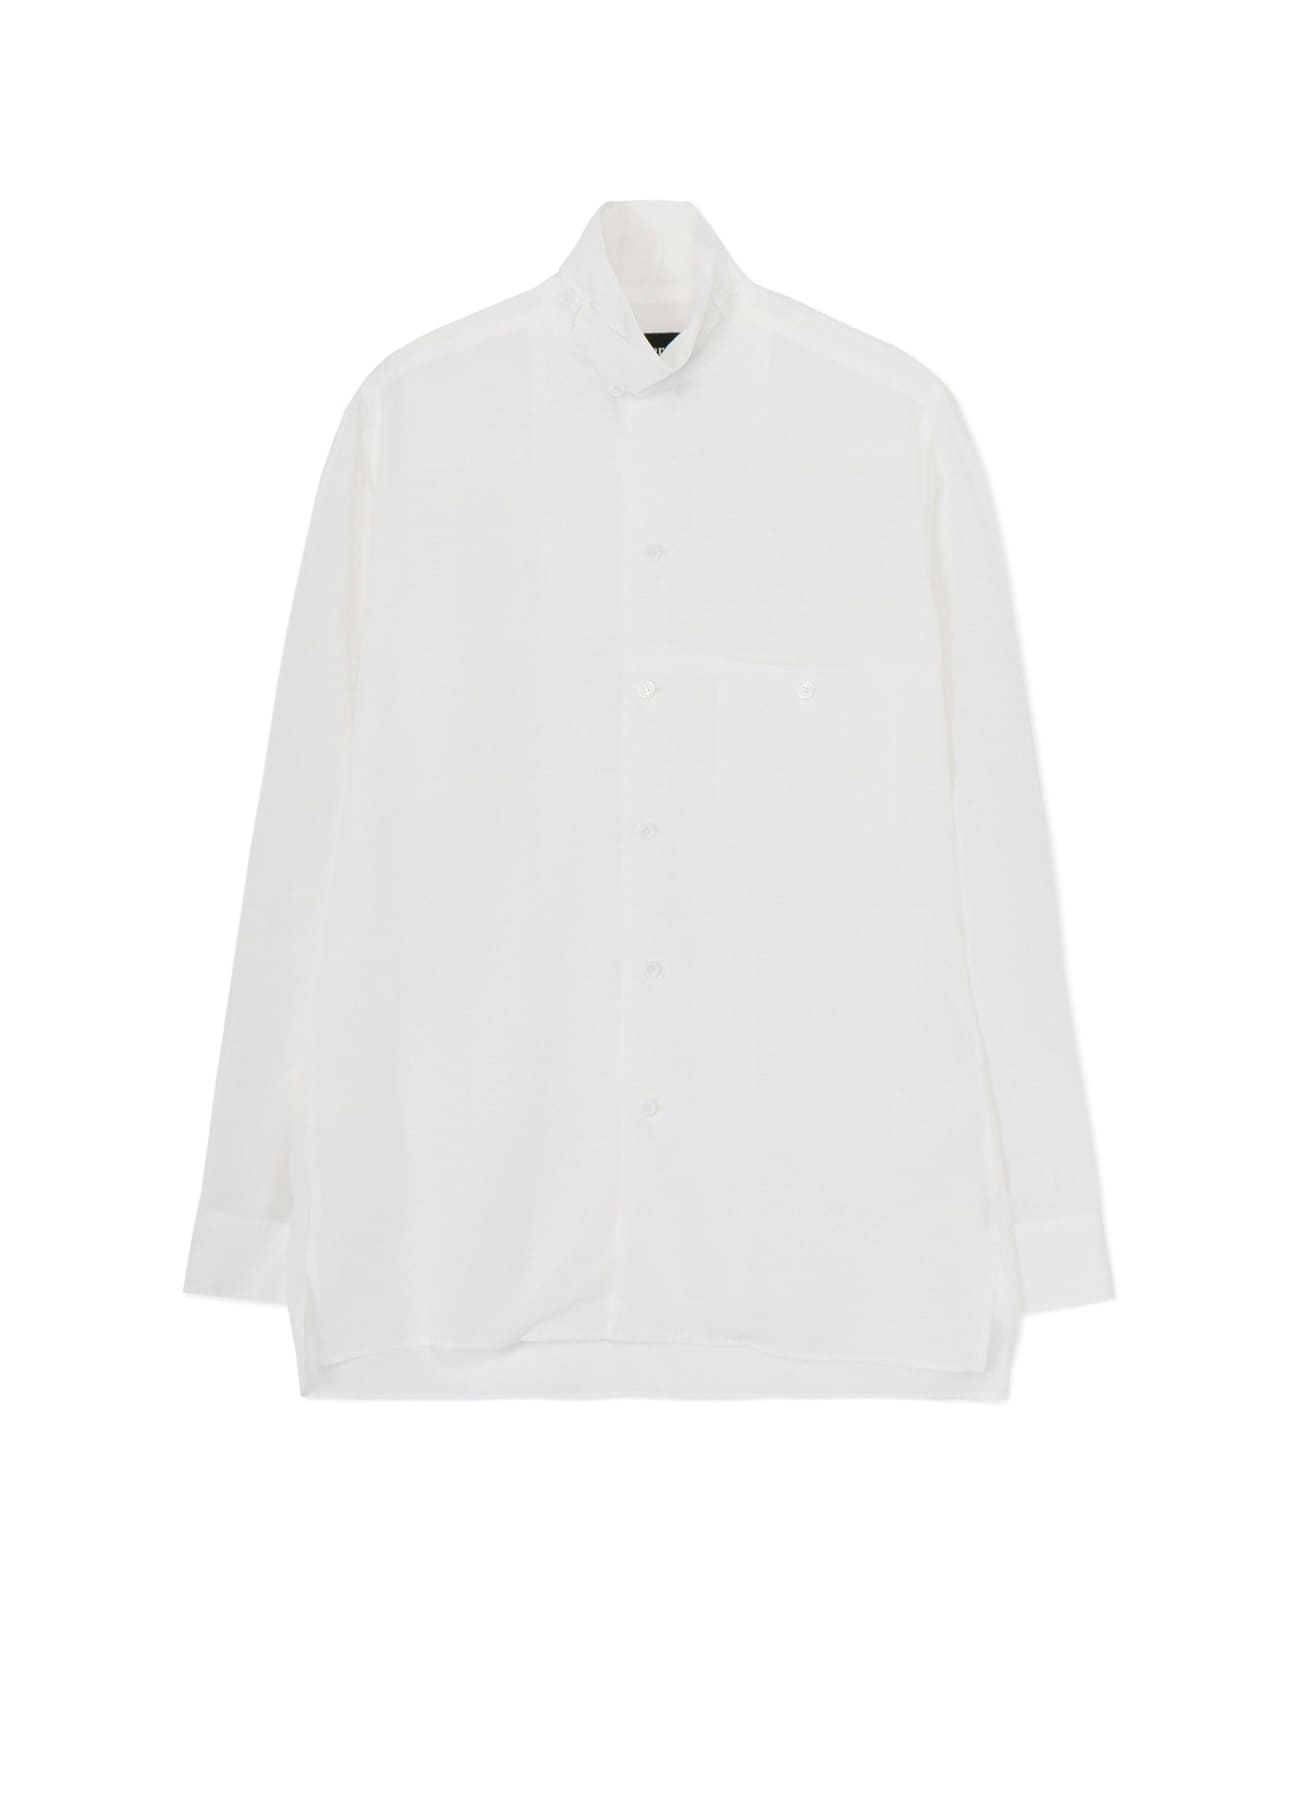 power of the WHITE shirt｜THE SHOP YOHJI YAMAMOTO